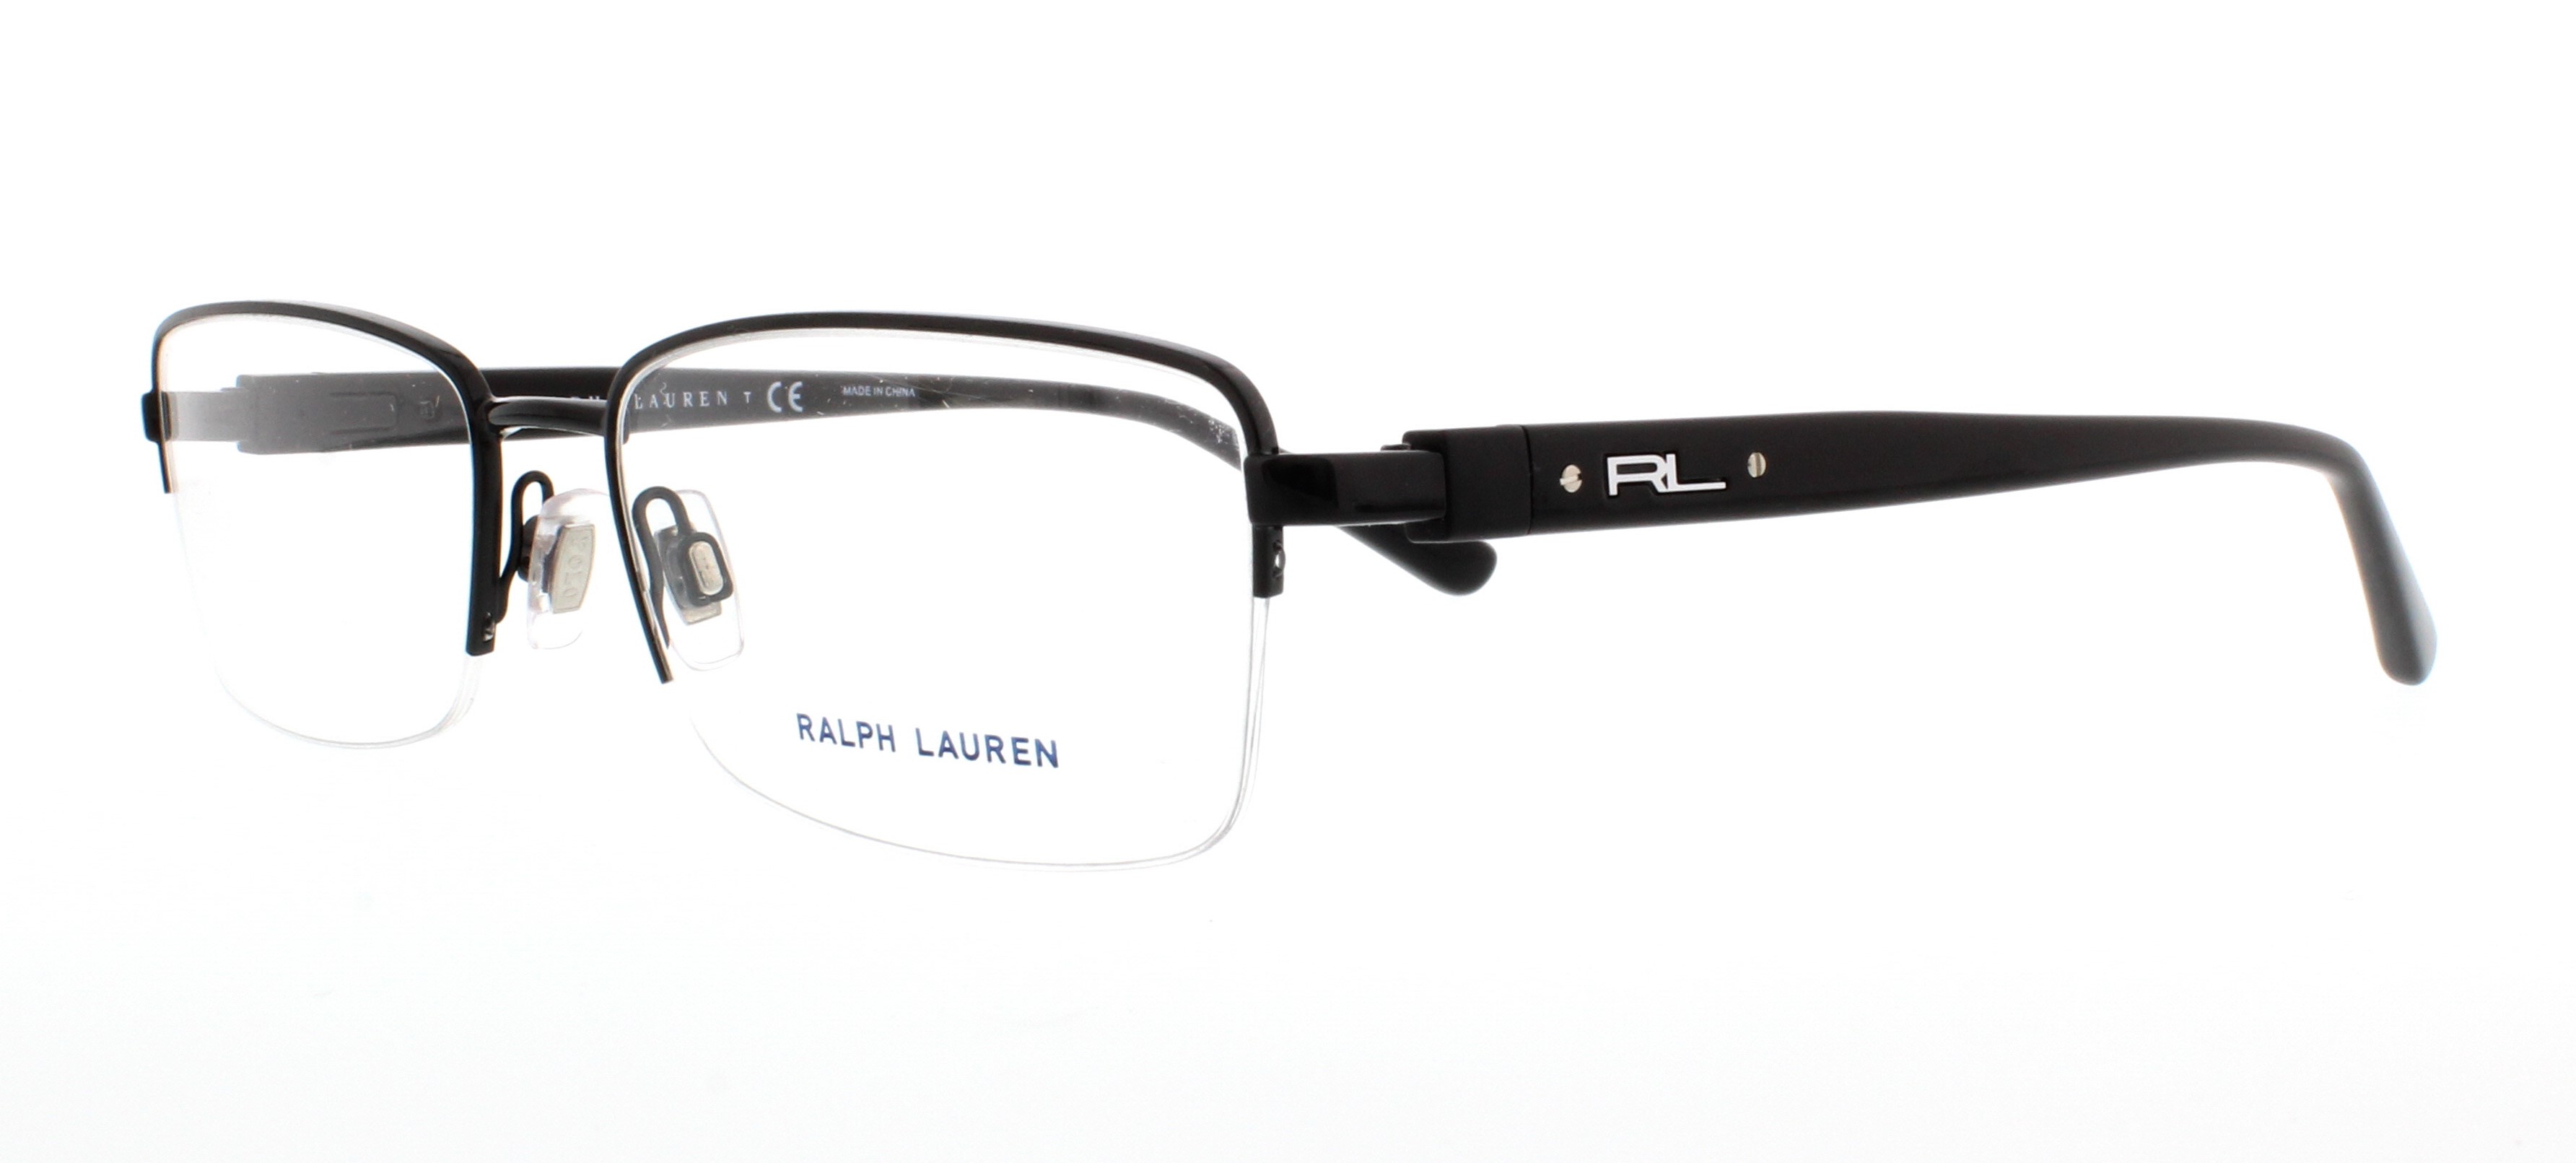 Picture of Ralph Lauren Eyeglasses PH1141